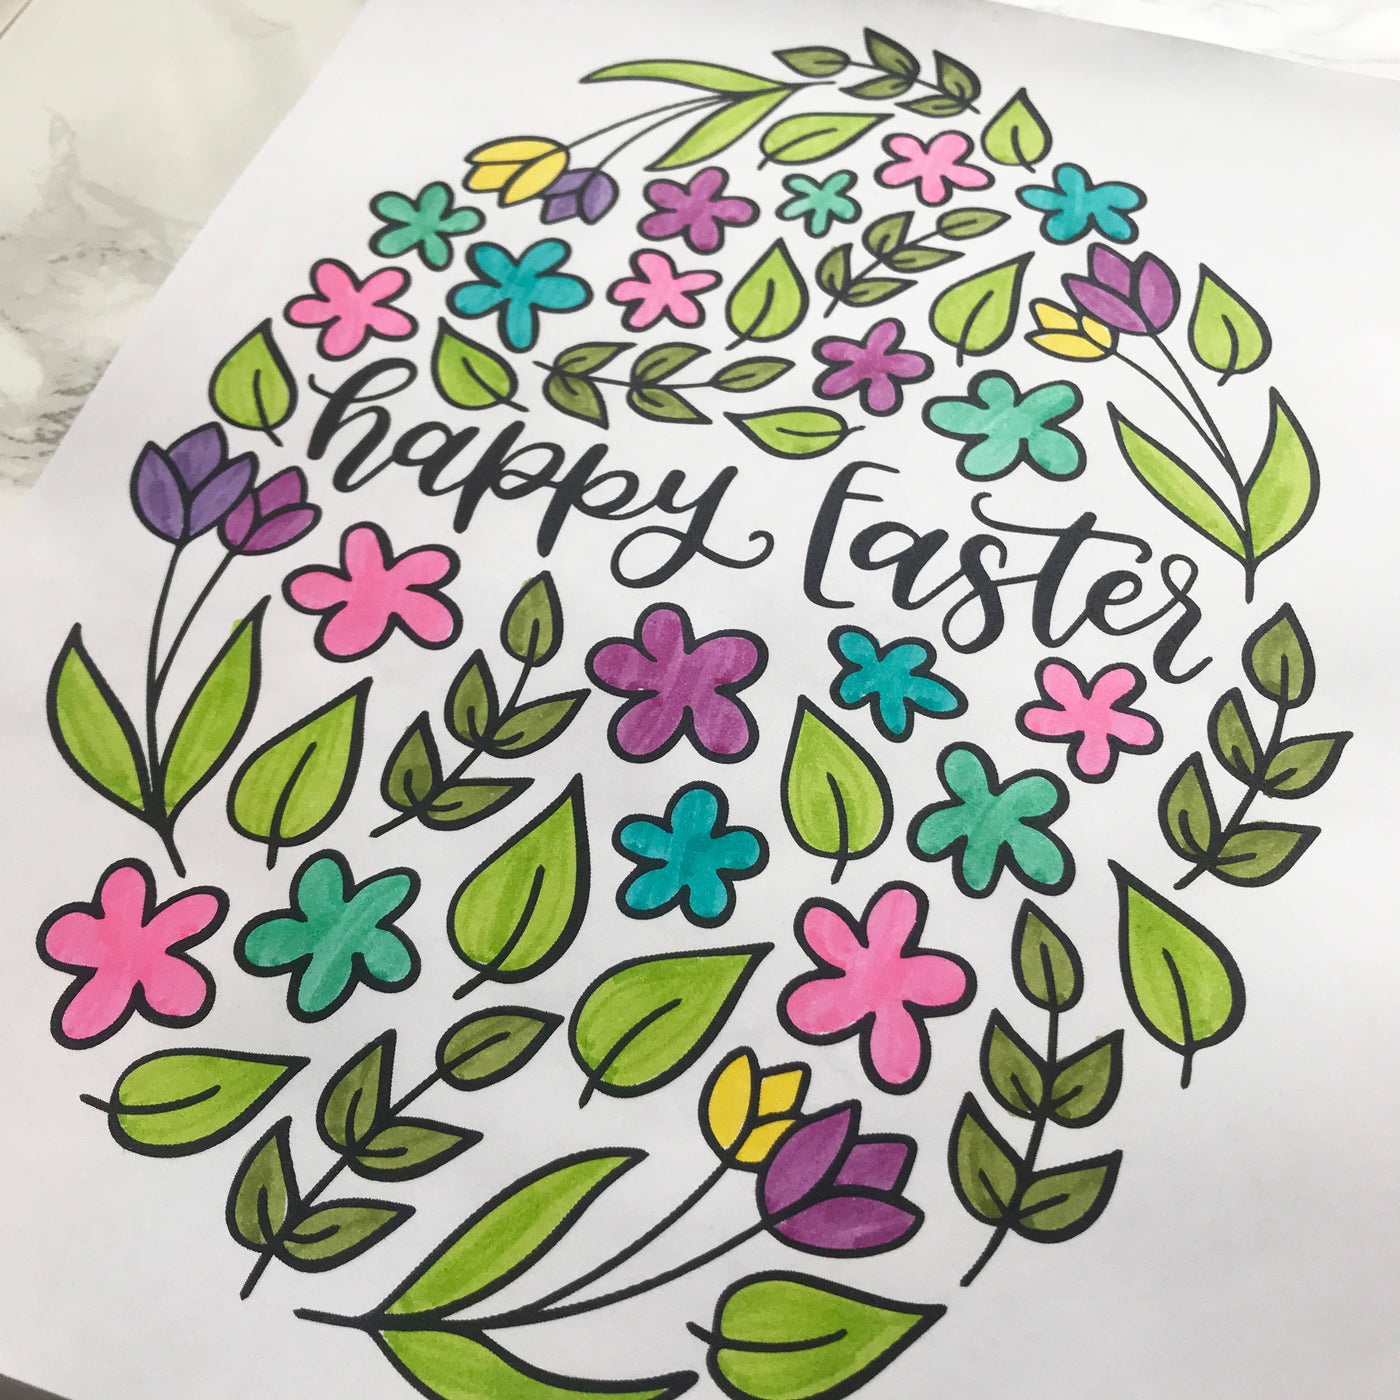 Happy Easter Coloring Page - JordynAlisonDesigns